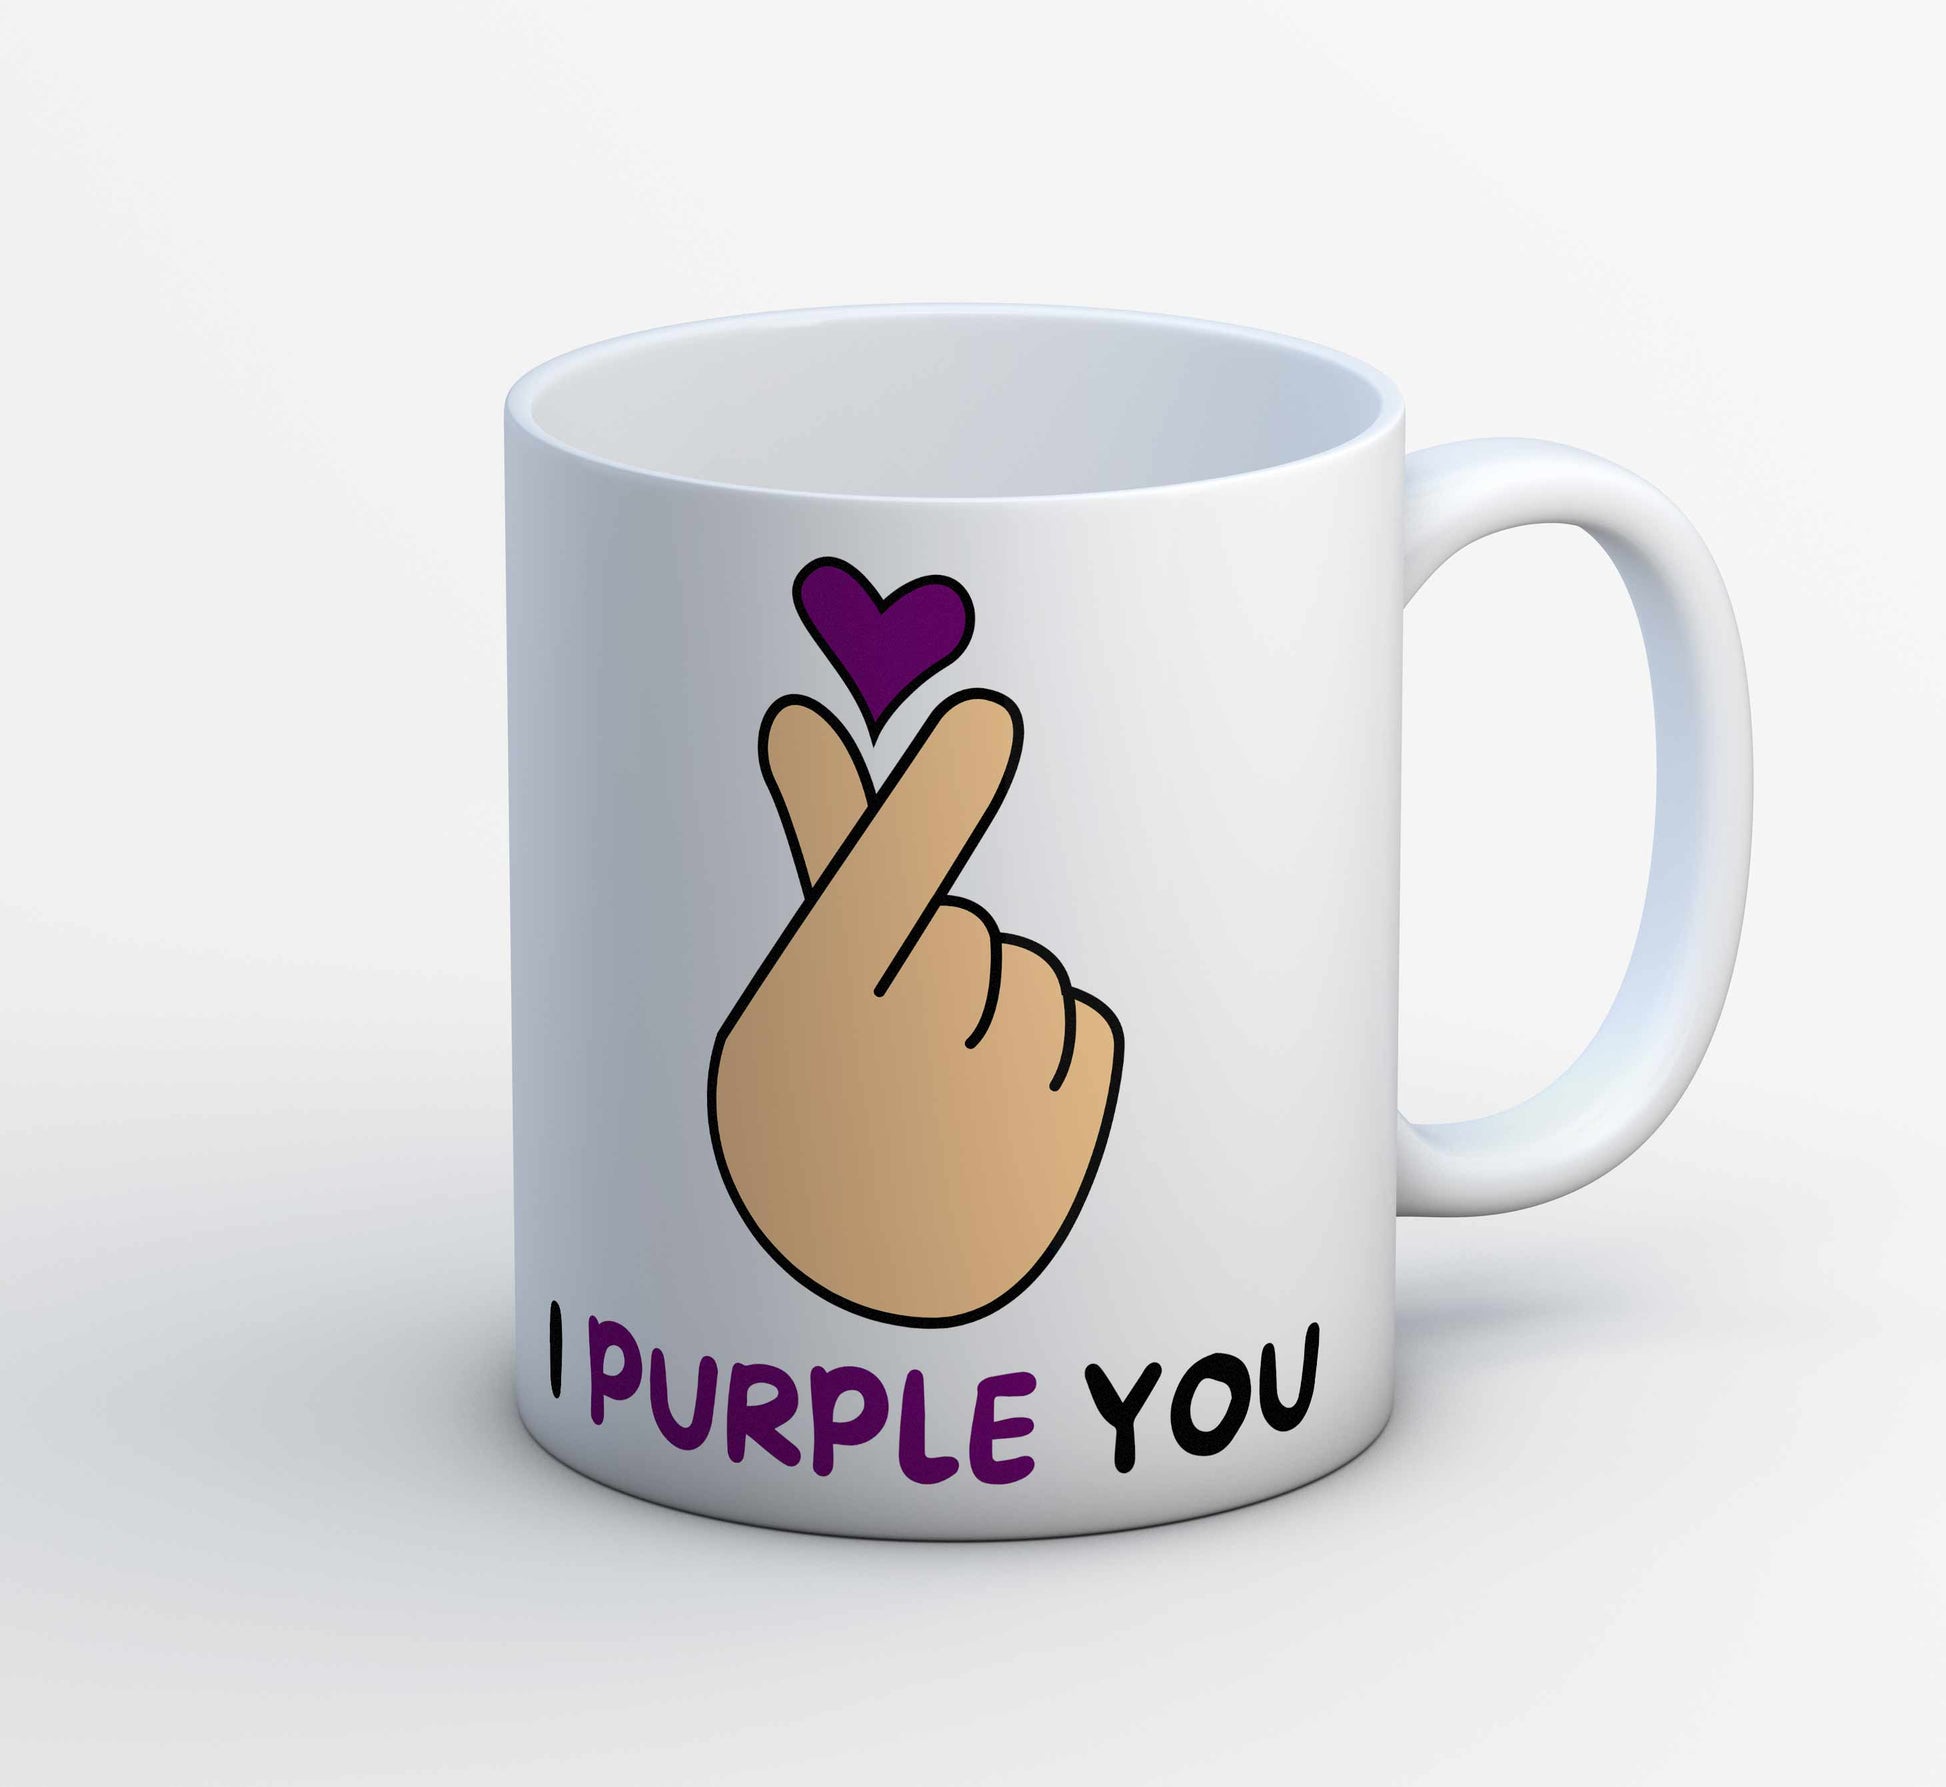 bts i purple you mug coffee ceramic music band buy online india the banyan tee tbt men women girls boys unisex  